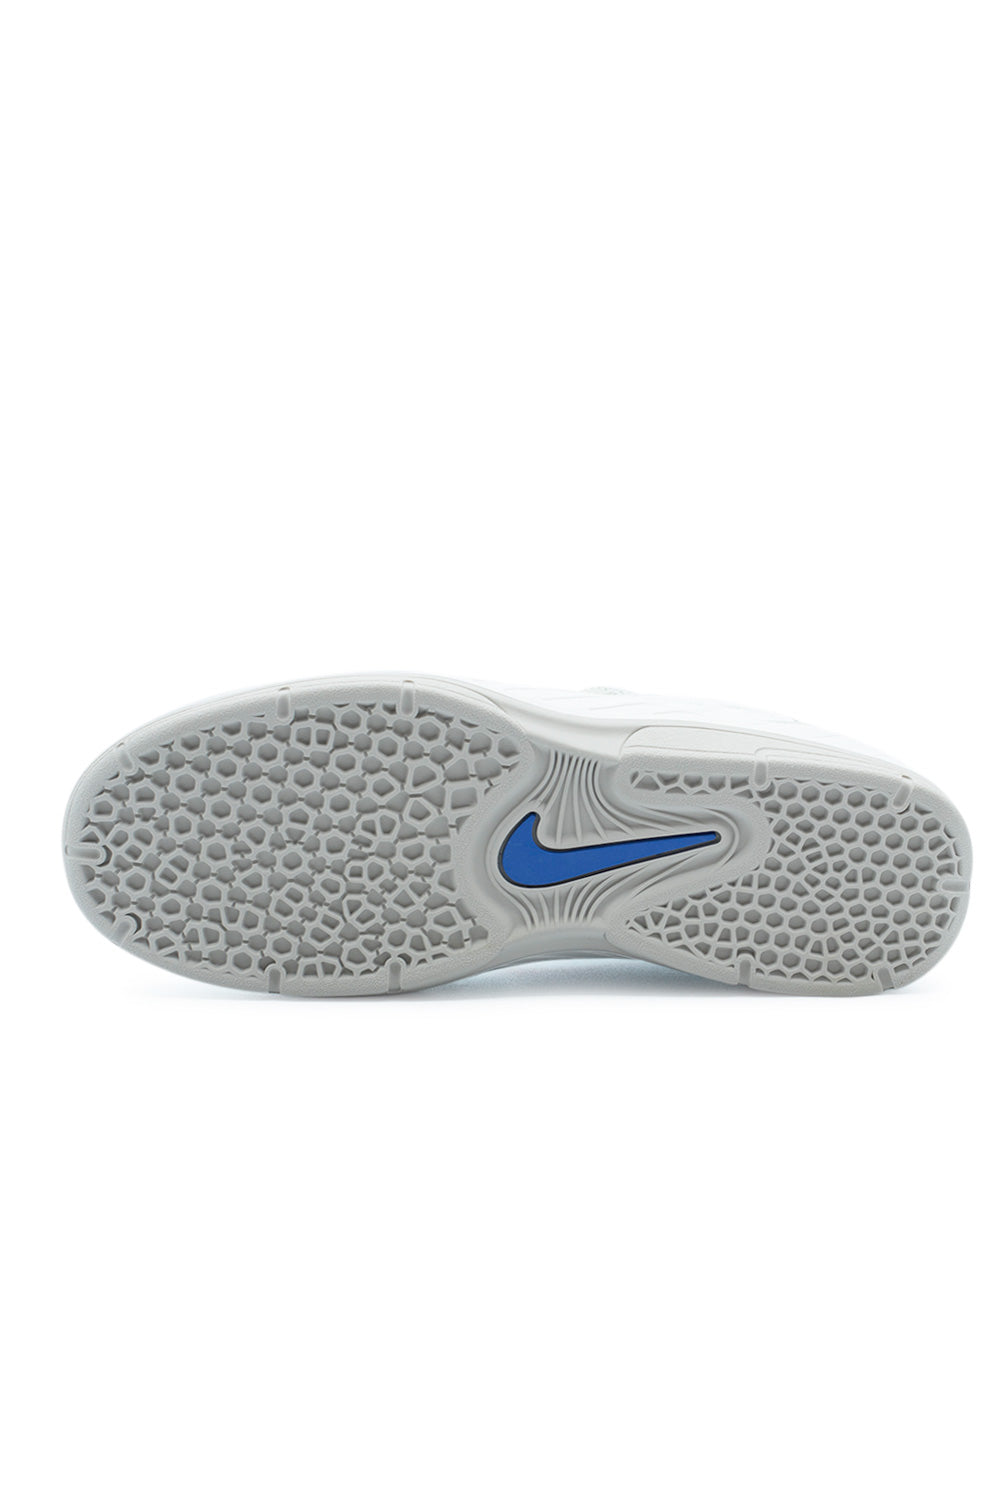 Nike SB Vertebrae Shoe Summit White / Cosmic Clay - BONKERS